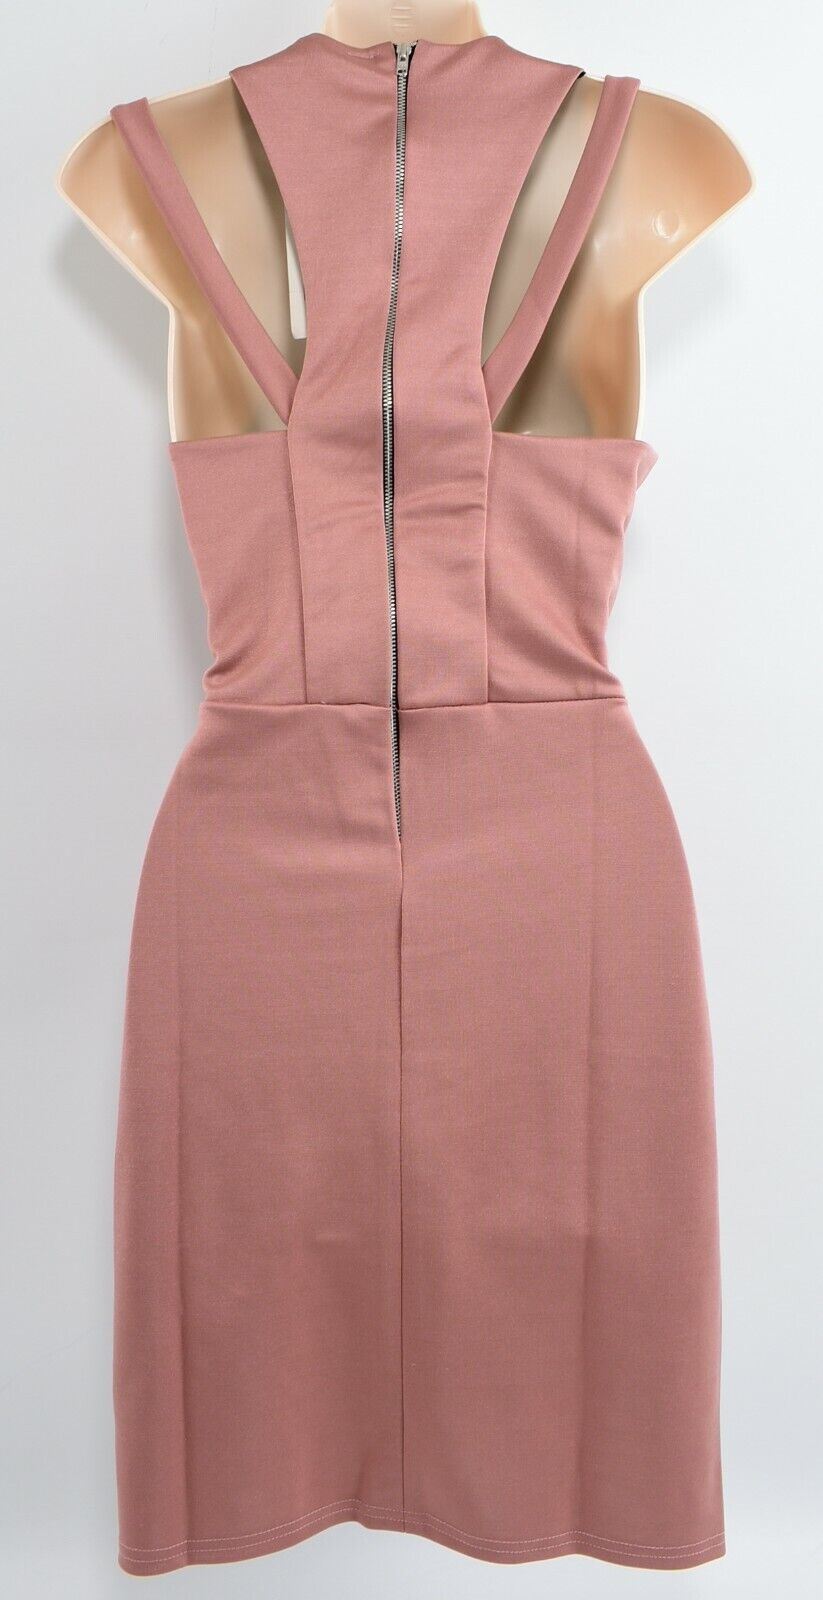 MISS SELFRIDGE Women's Shoulder Cut-Out Pencil Dress, Dusty Pink, size UK 12